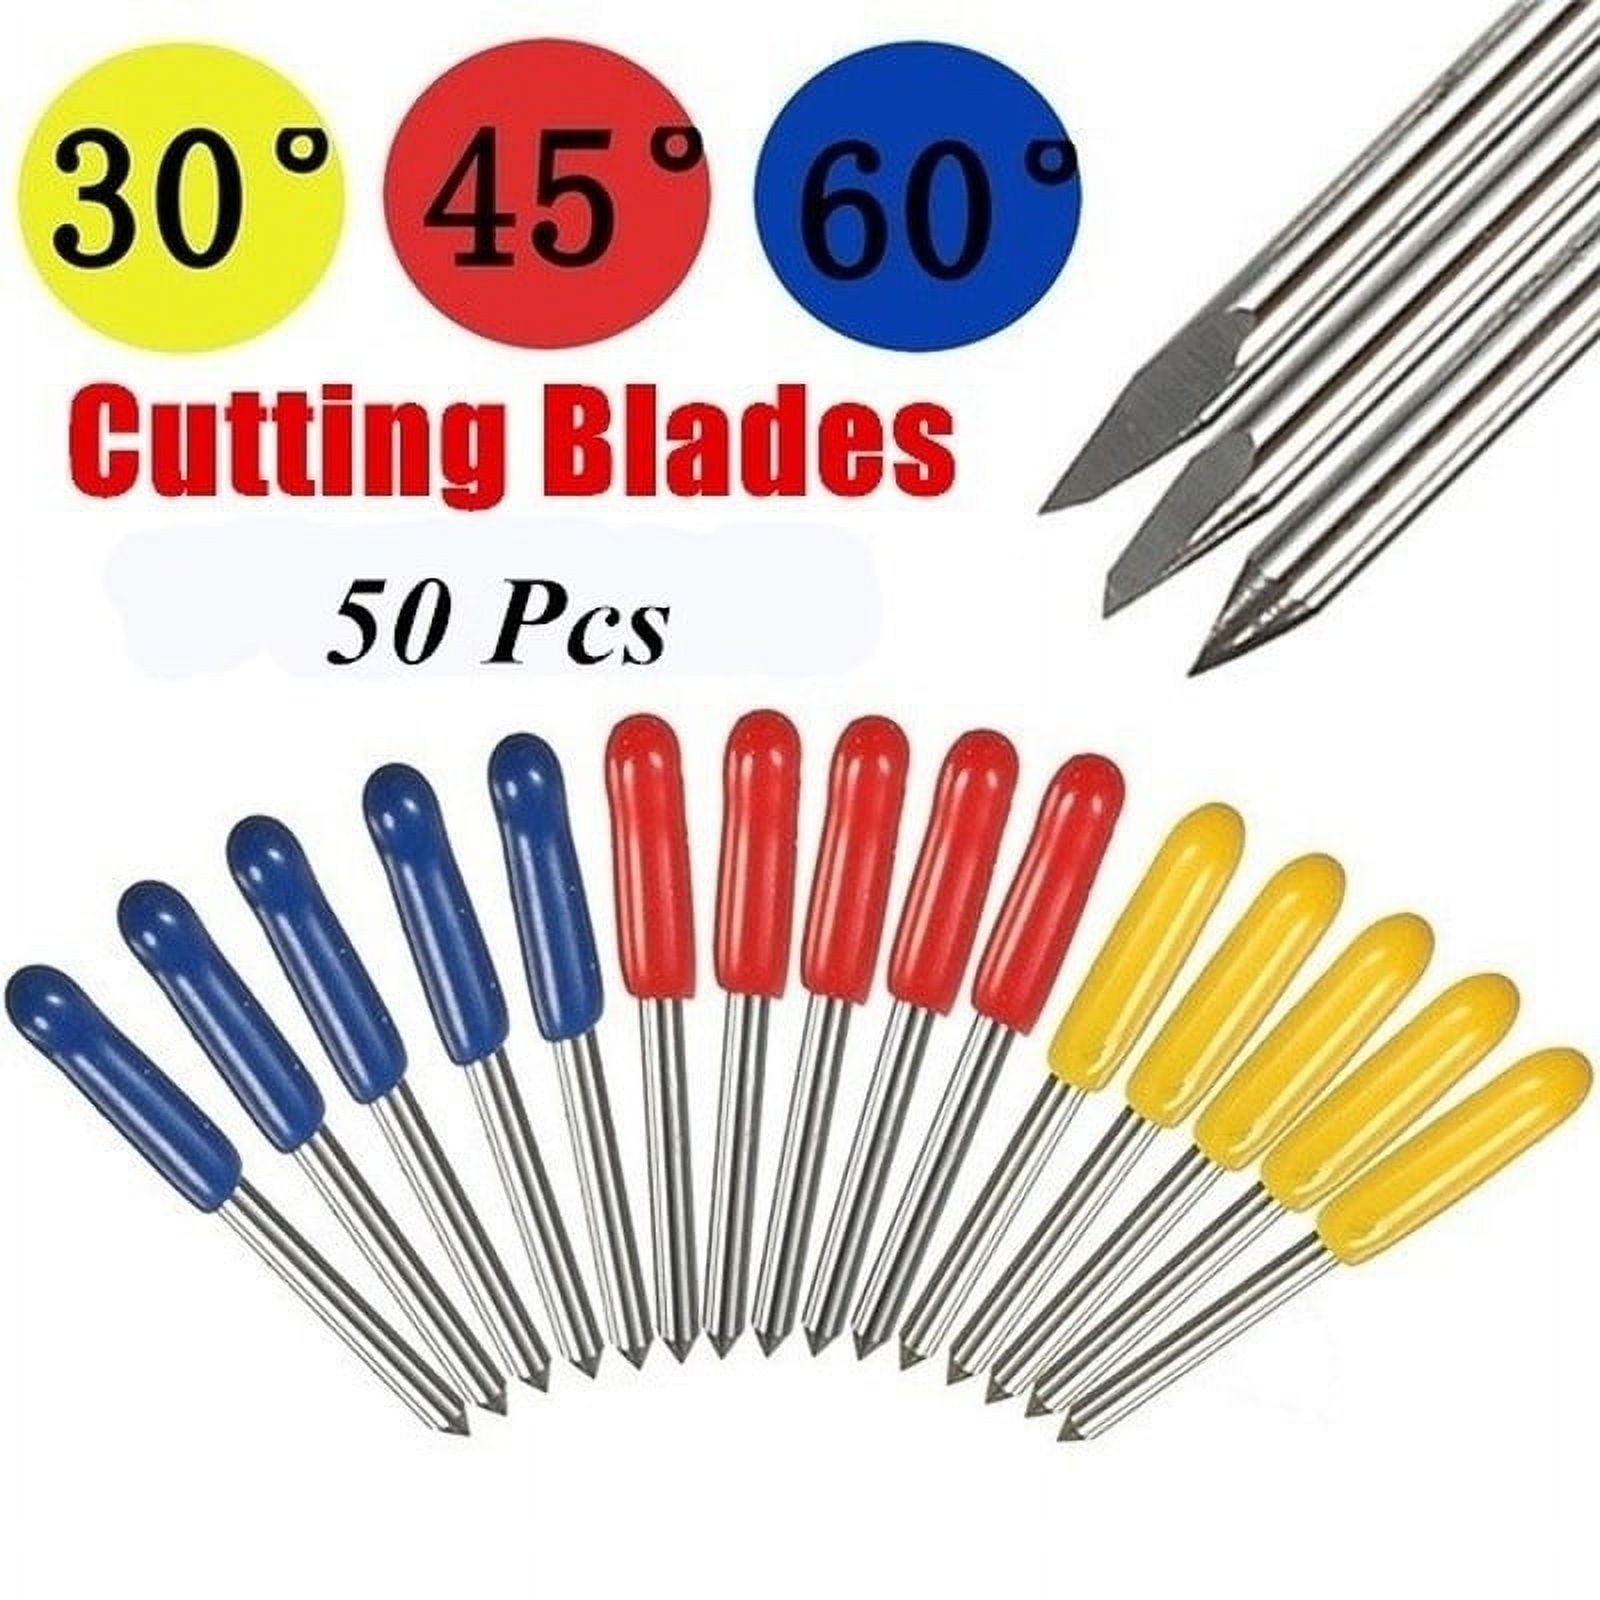 Hadwoer 50PCS Replacement Cutting Blades for Cricut Explore Air 2/Air  3/Maker/Maker 3, Includ 10PCS Fine Point Blade, 30PCS Standard Blaeds and  10PCS Deep Point Blades Compatible with Cricut Blades 